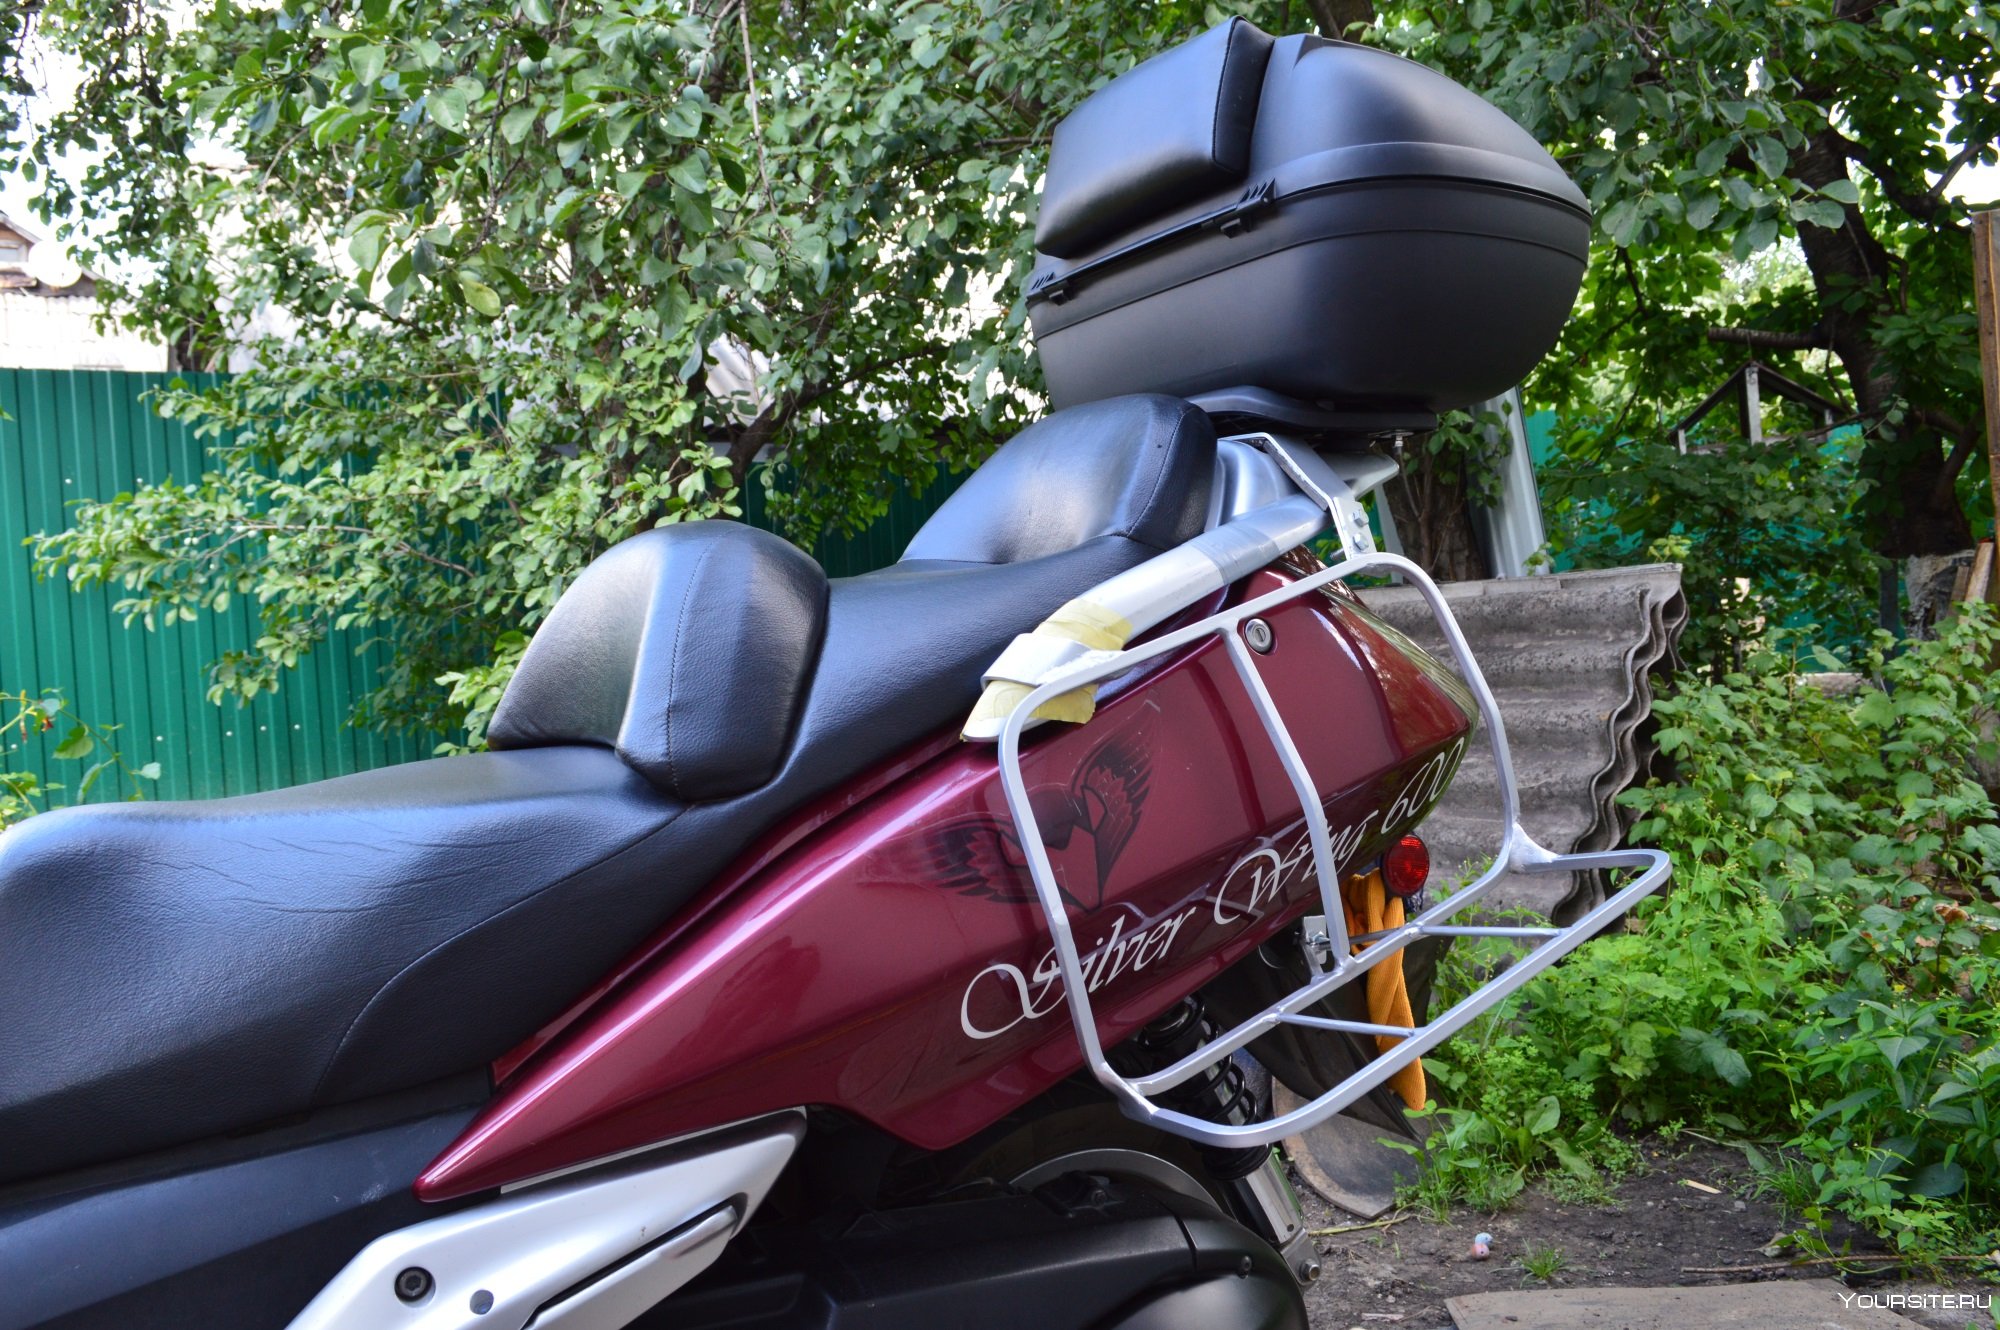 Багажник на скутер Айма Тигер. Как сделать самому?